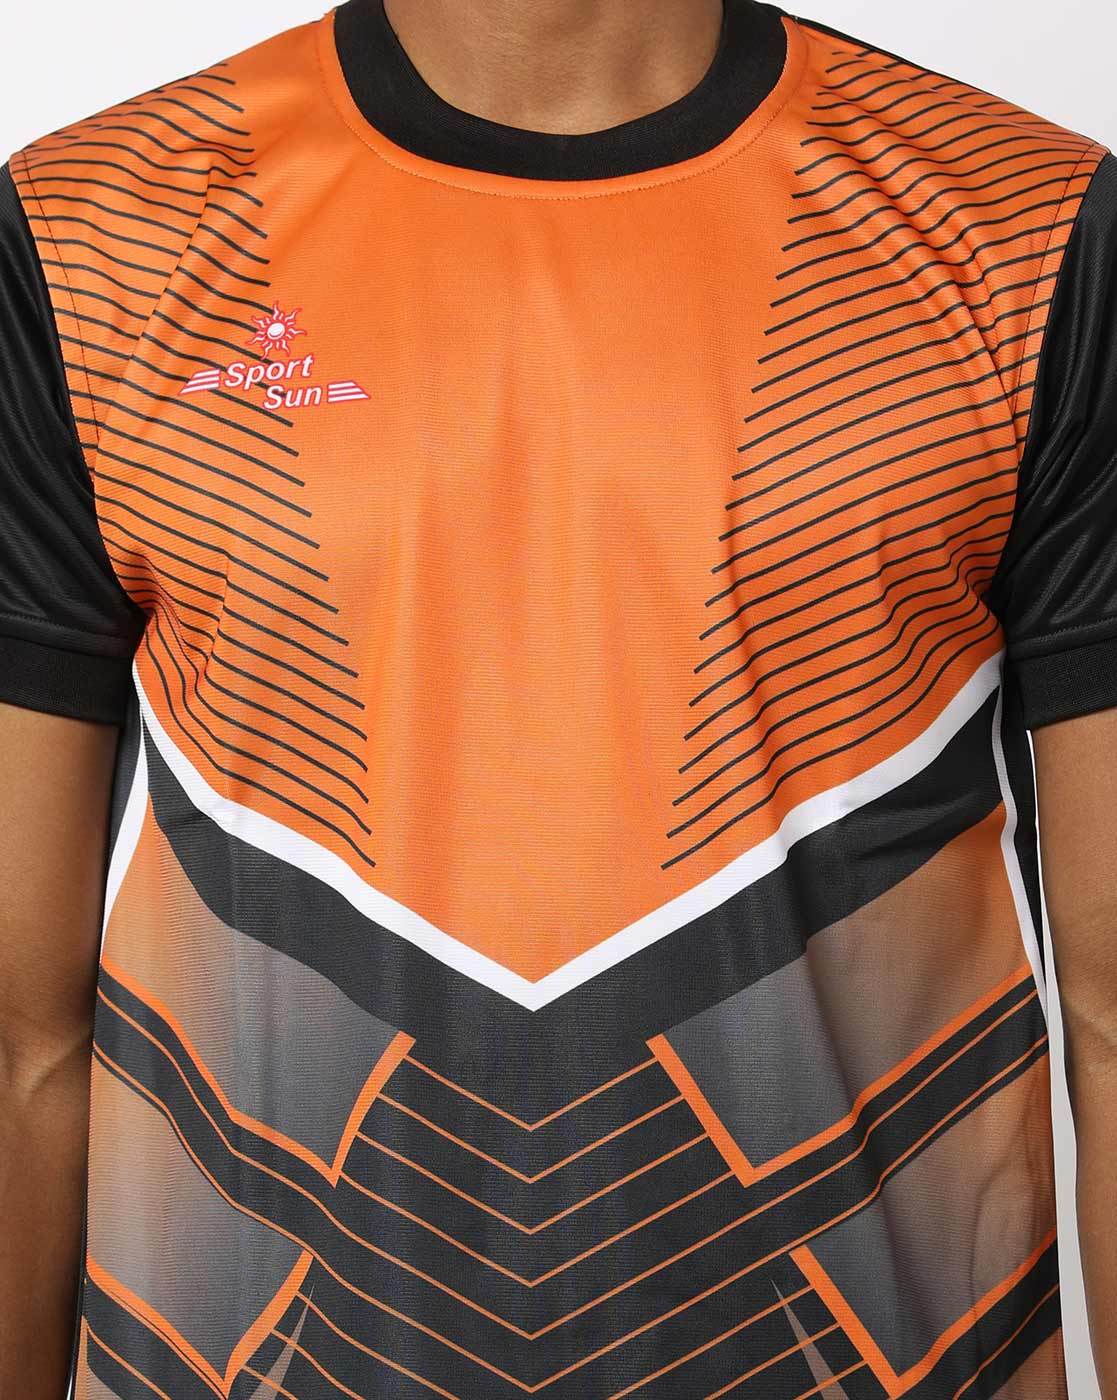 Buy Black Orange Tracksuits For Men By Sport Sun Online Ajio Com